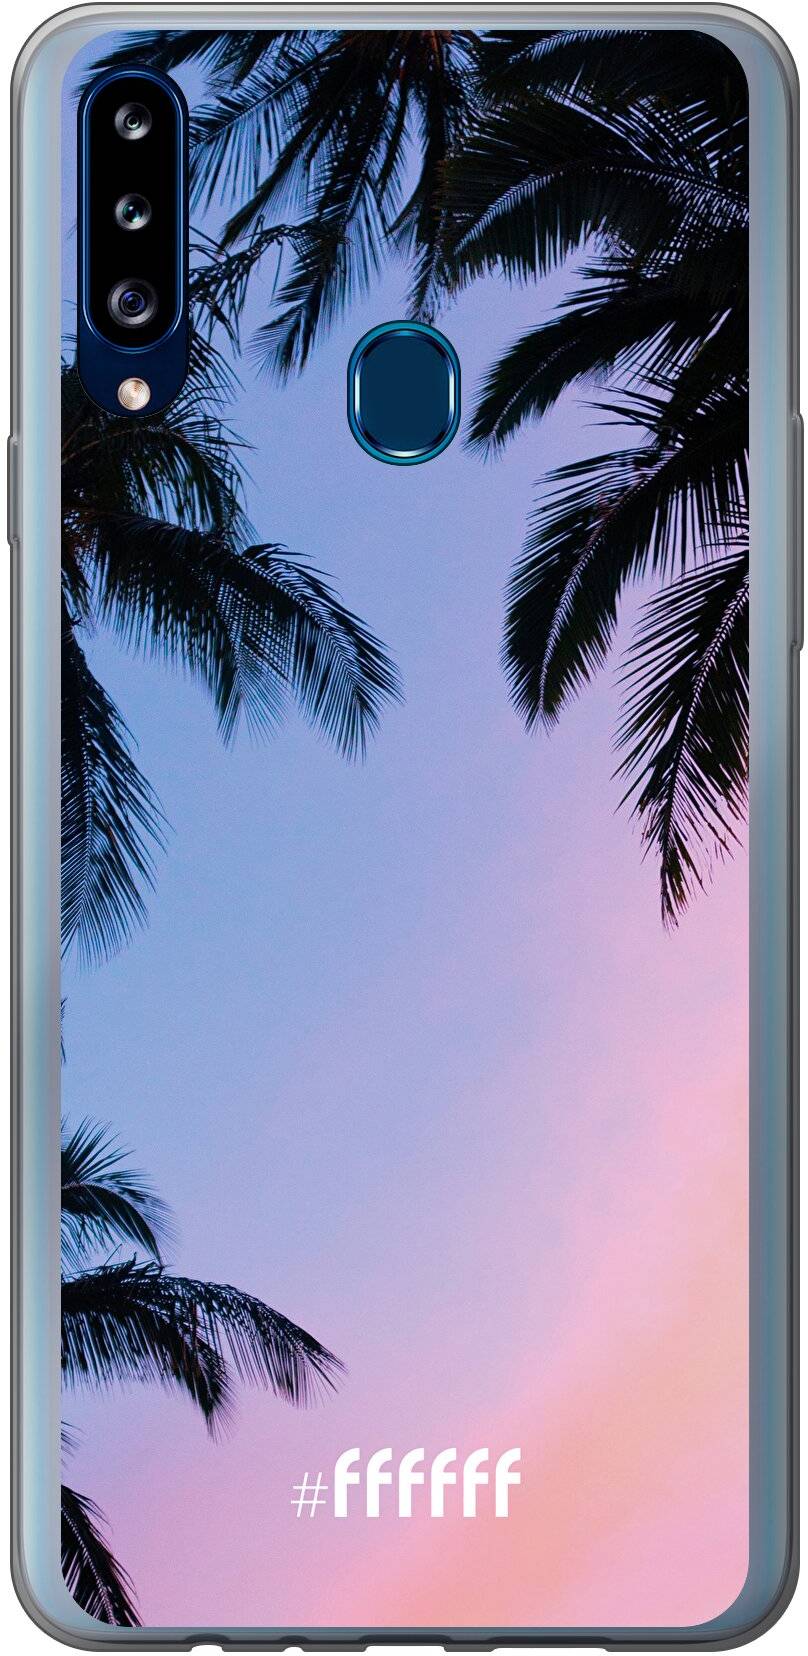 Sunset Palms Galaxy A20s